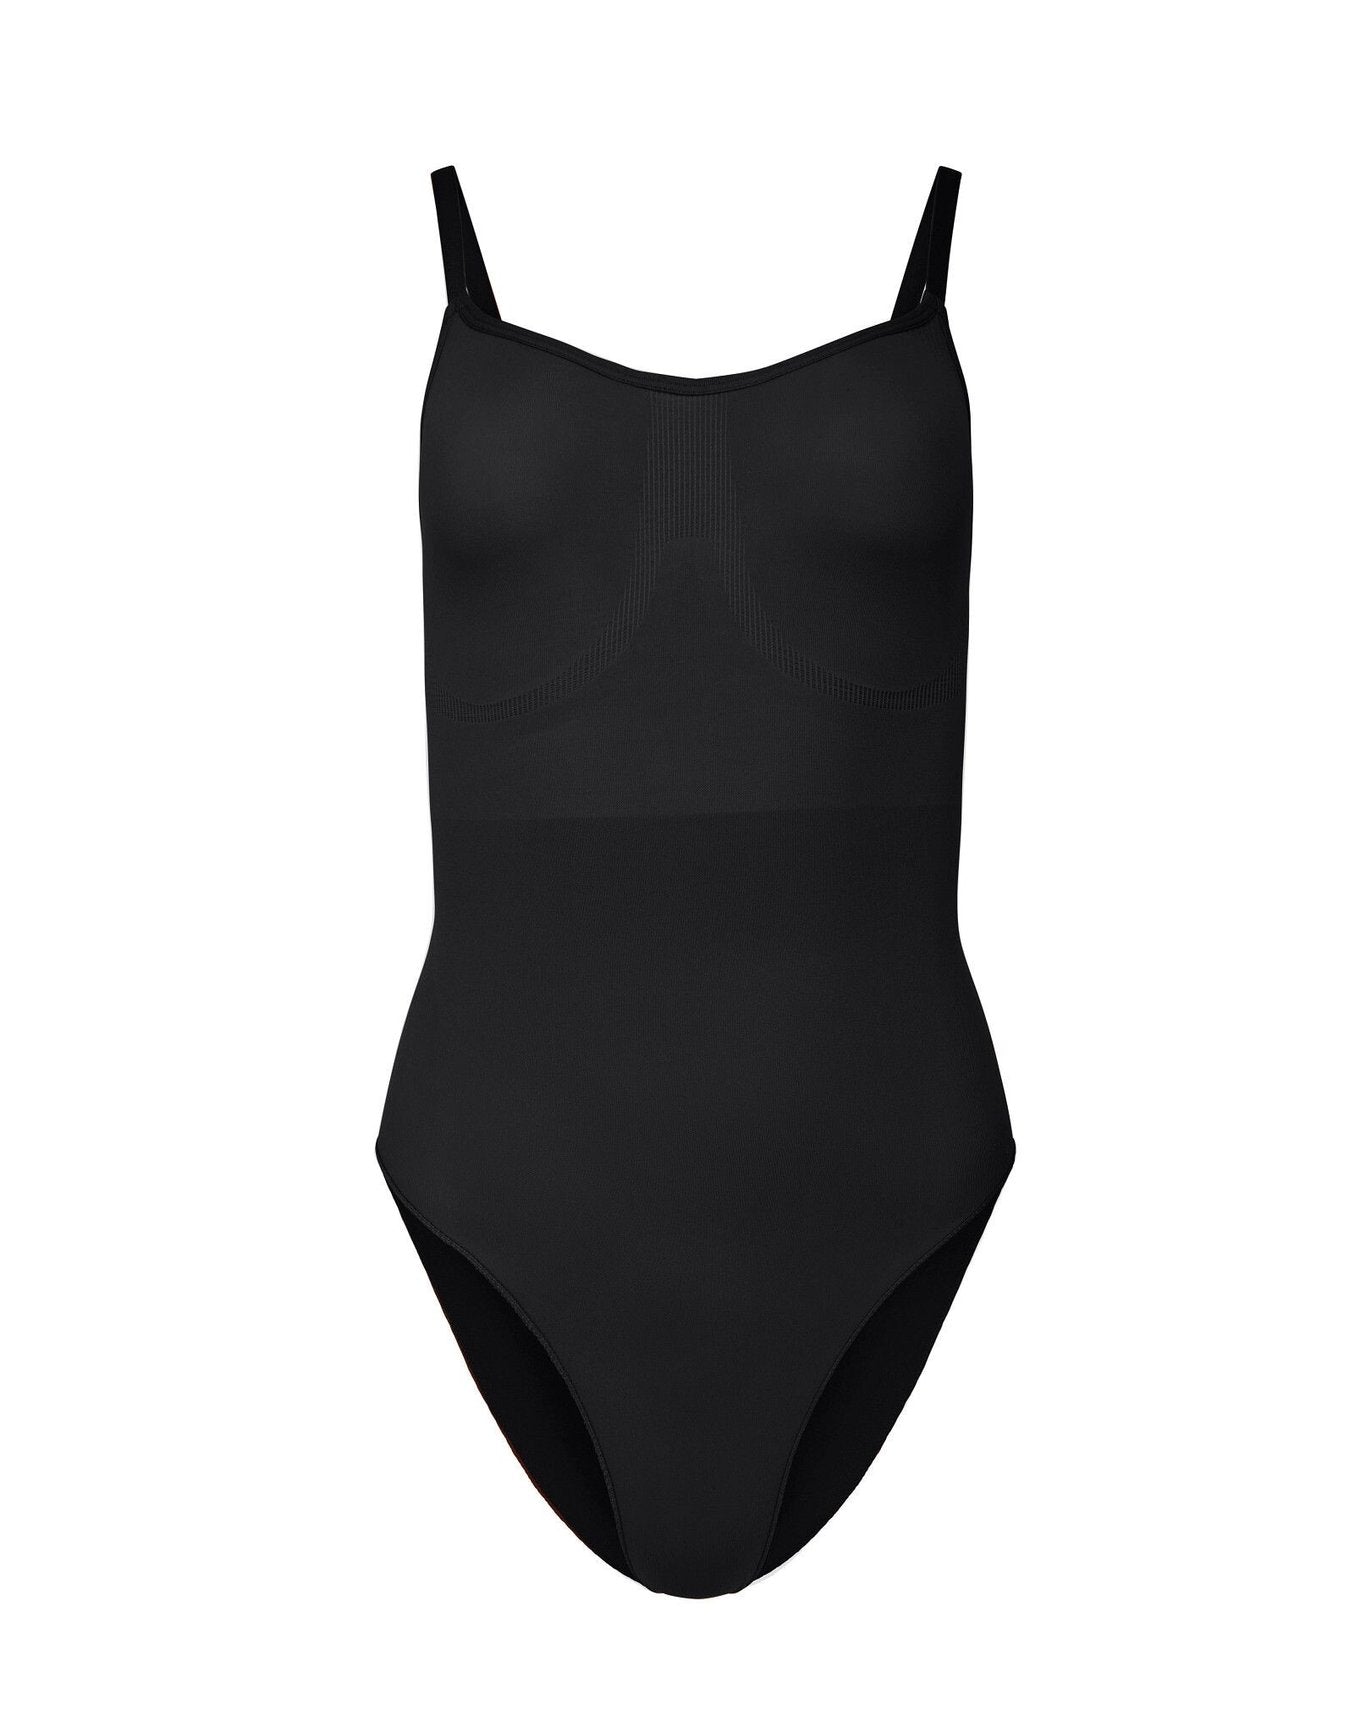 nueskin Cady High-Compression Cheeky Bodysuit in color Jet Black and shape bodysuit